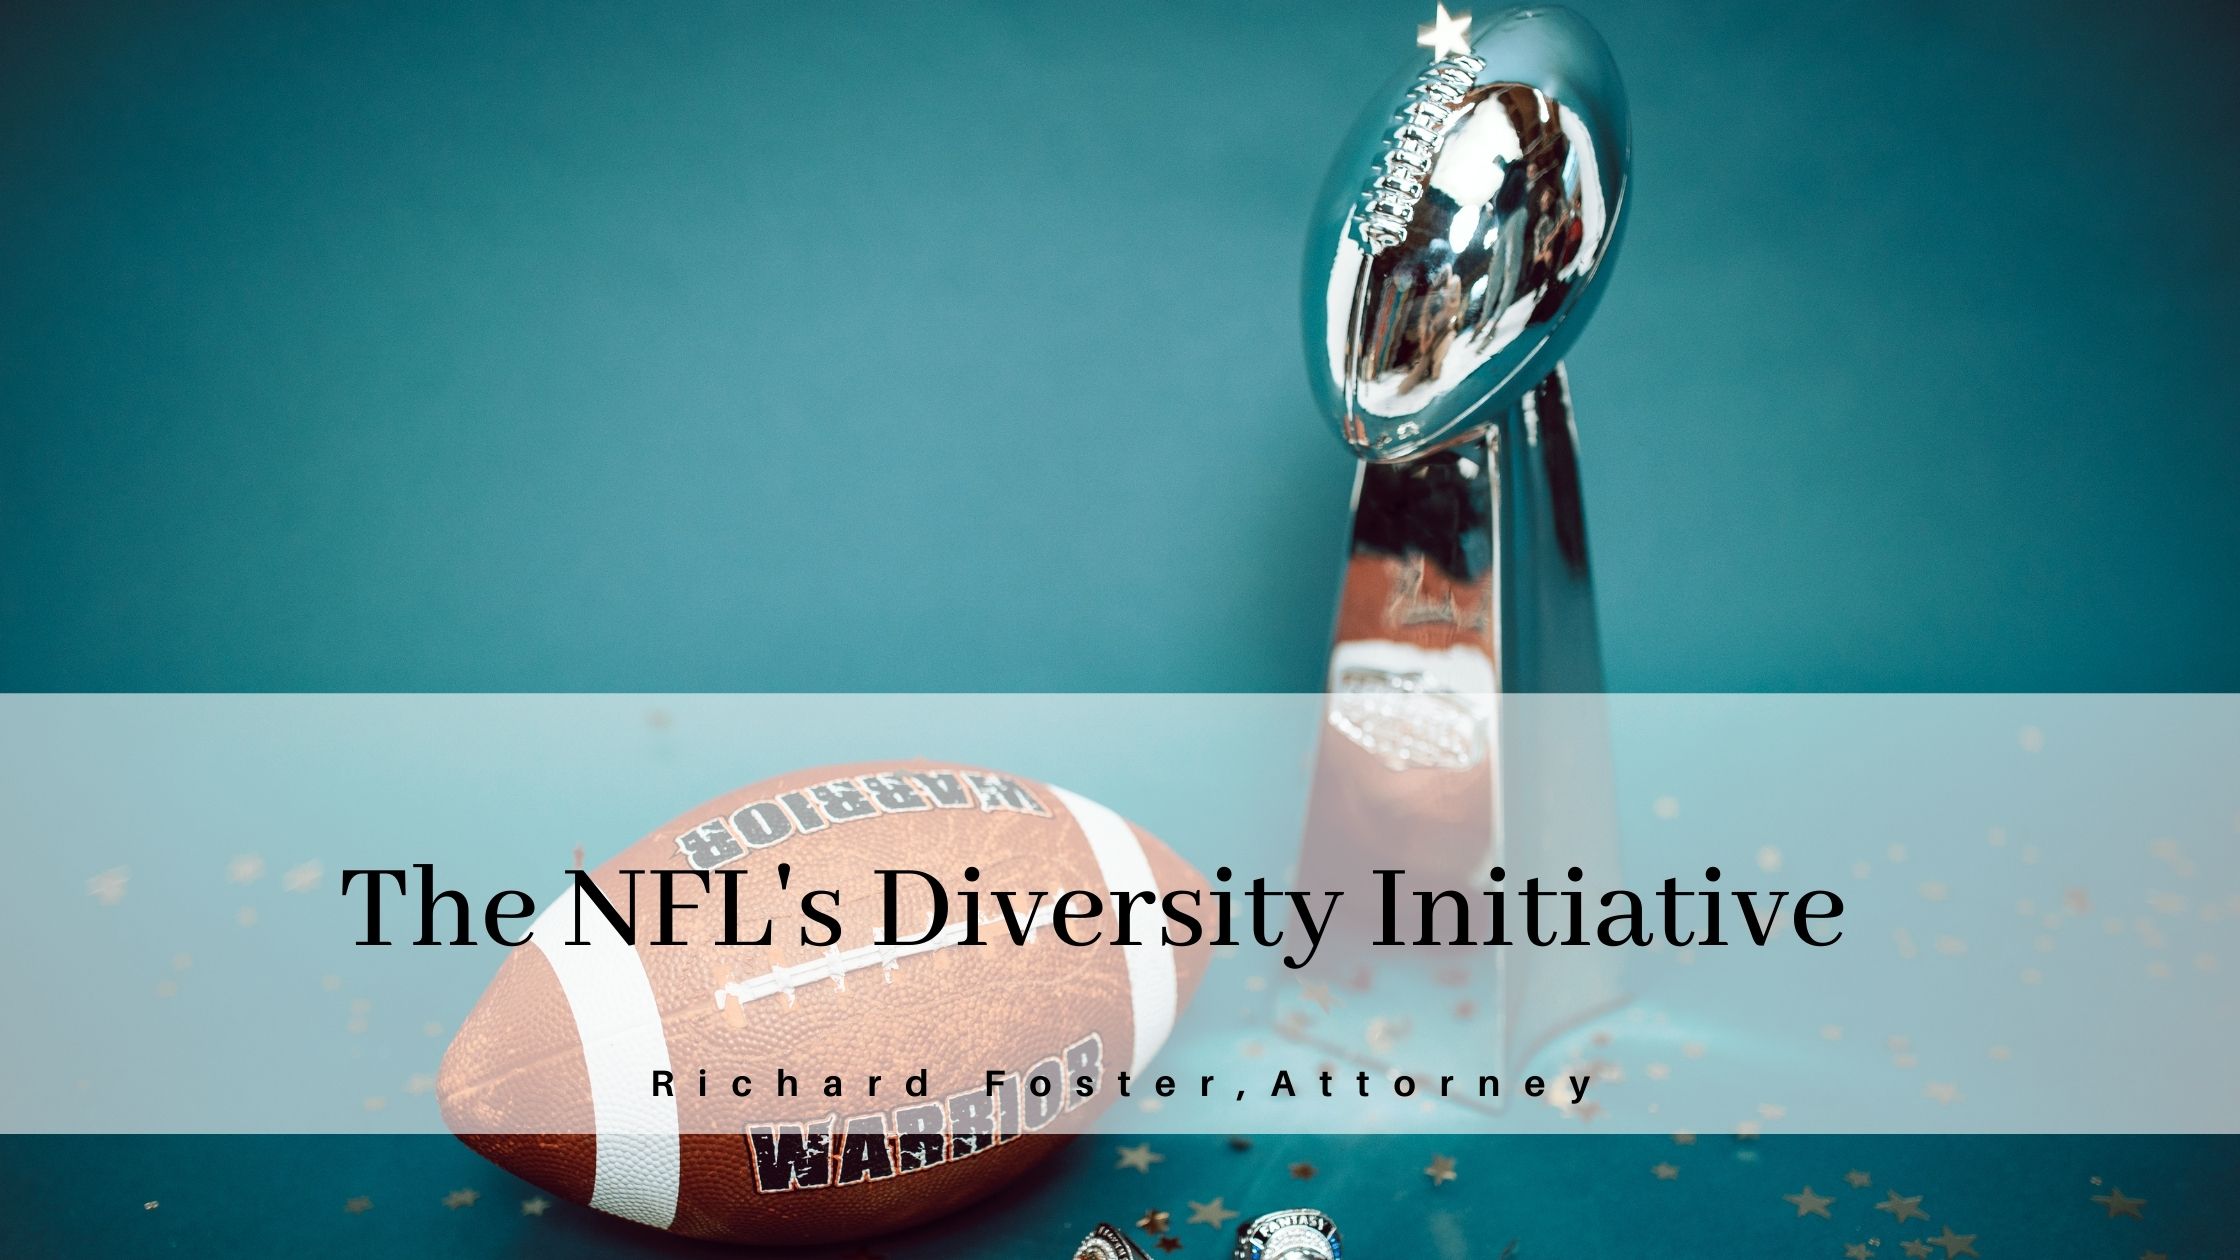 The NFL's Diversity Initiative

Richard Foster, Attorney
——